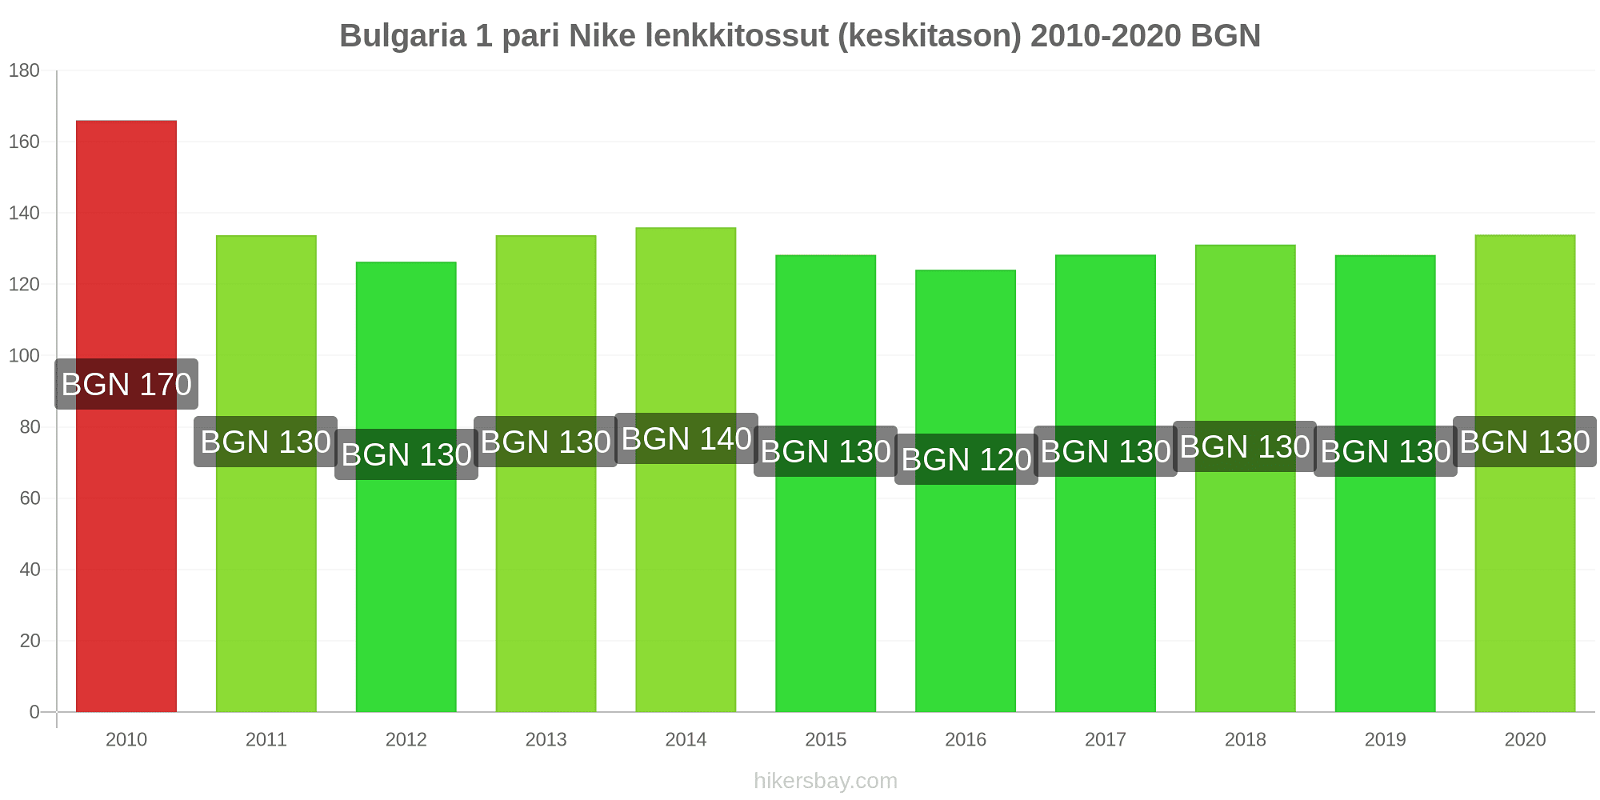 Bulgaria hintojen muutokset 1 pari Nike lenkkitossut (keskitason) hikersbay.com